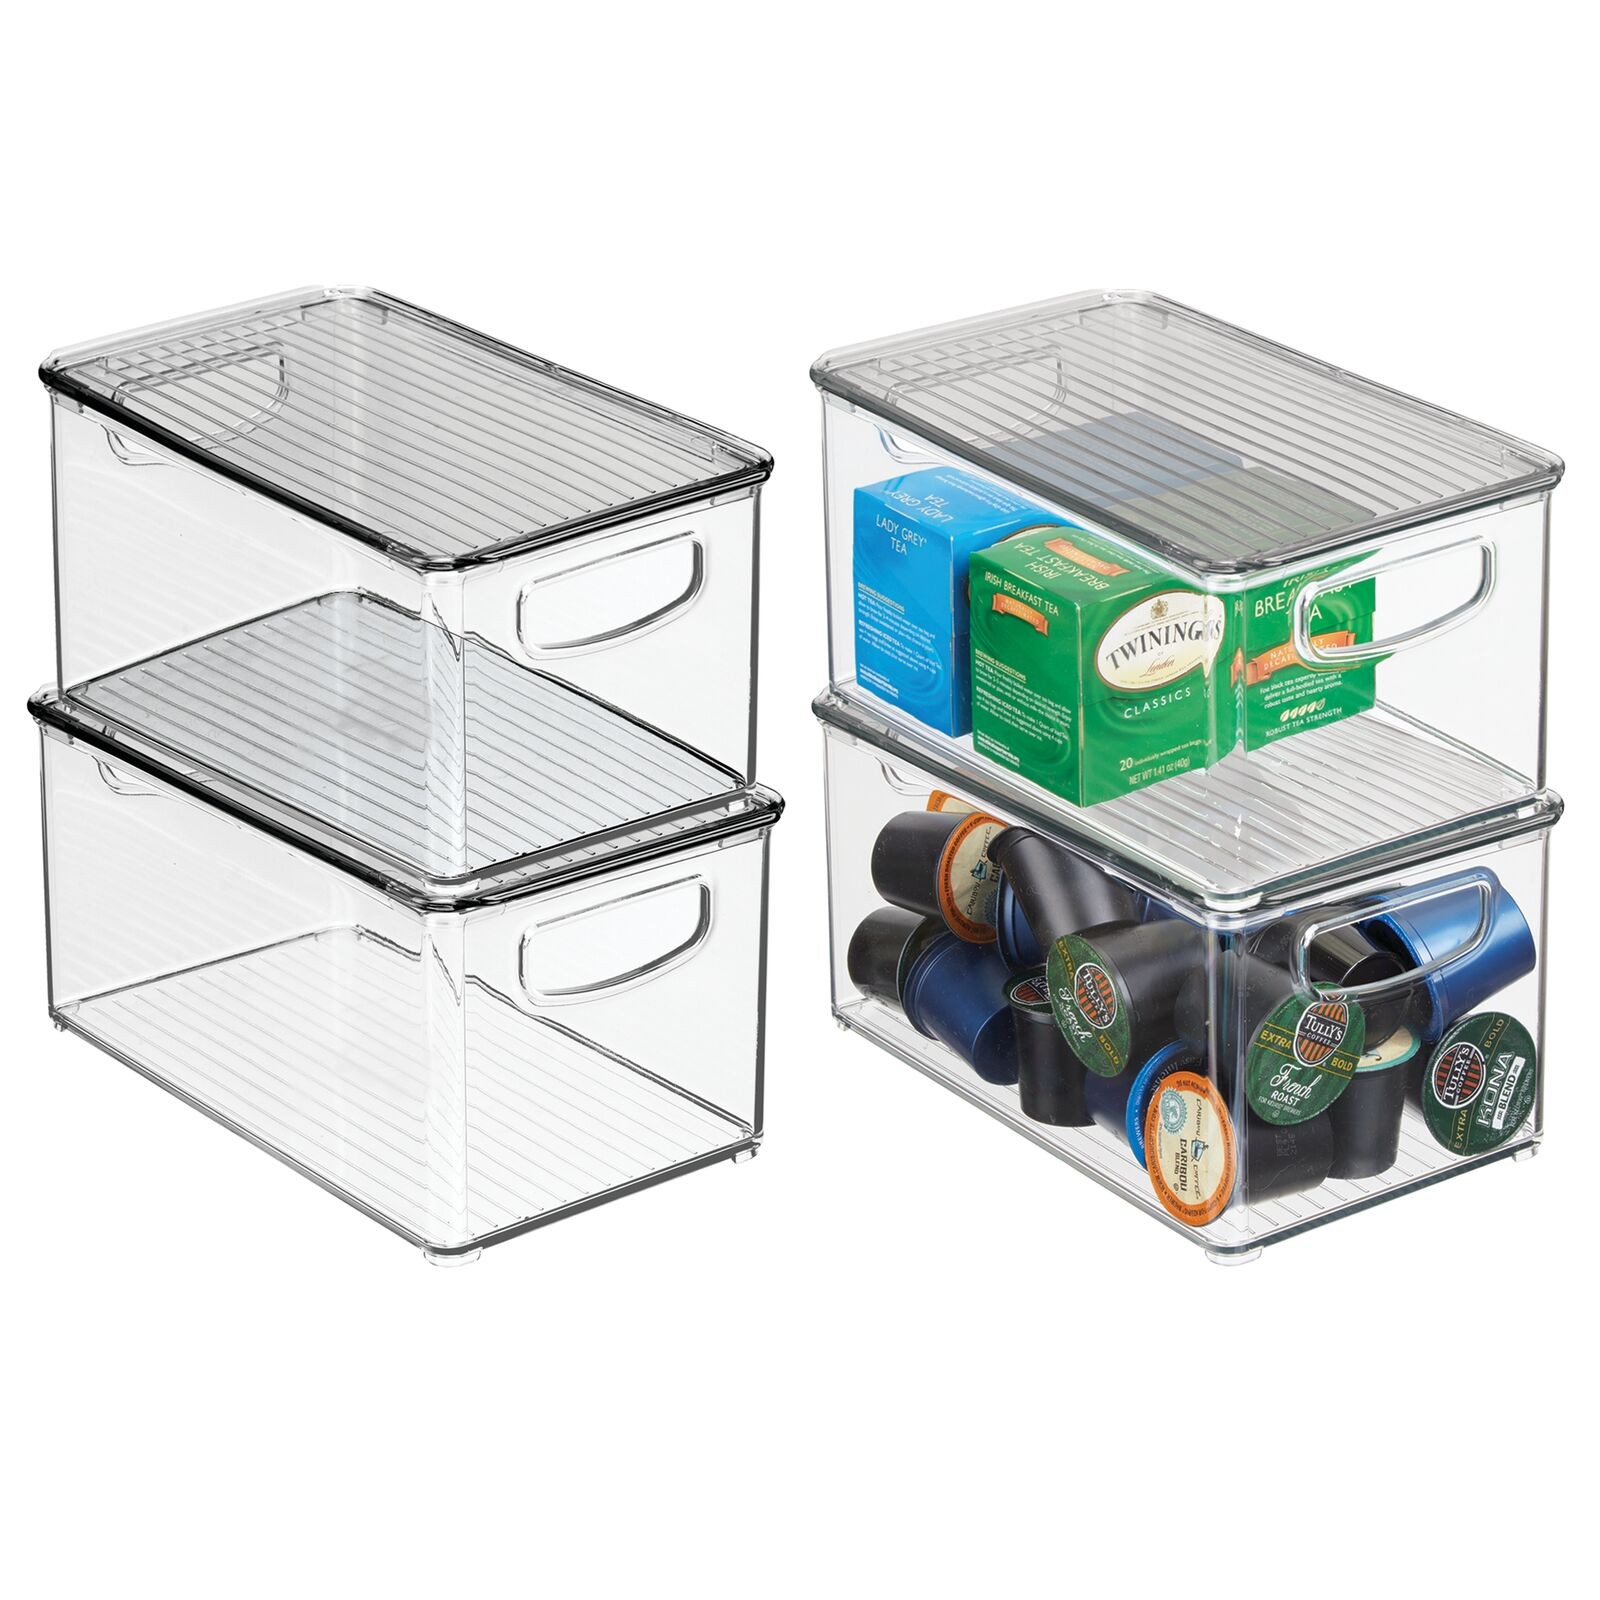 mDesign Plastic Storage Organizer Bin with Handles for Closets